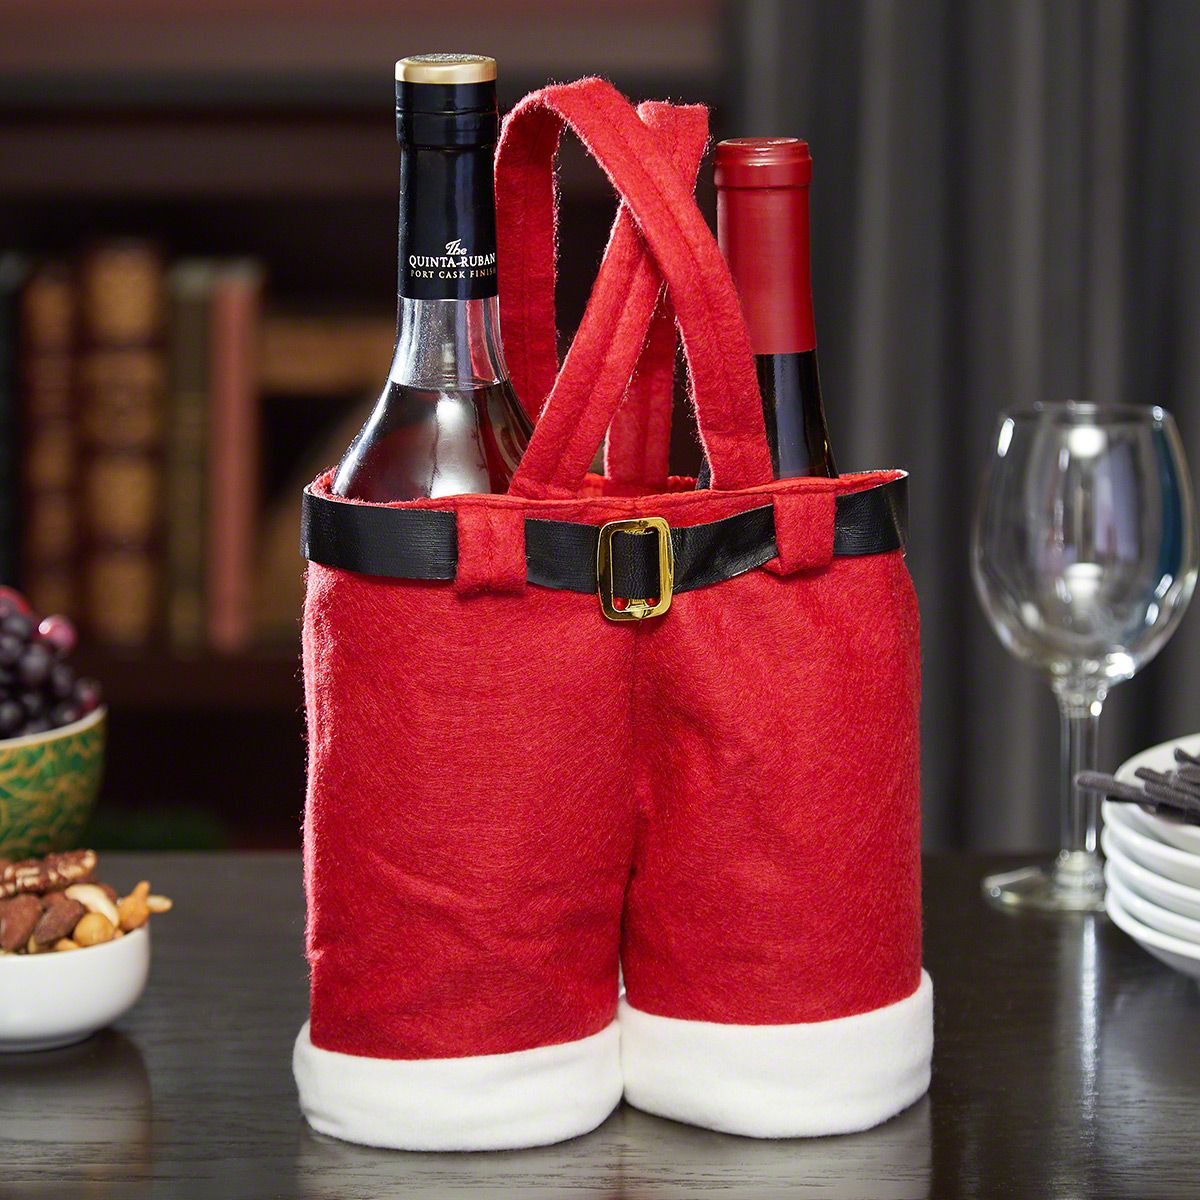 https://images.homewetbar.com/media/catalog/product/1/4/1420-santa-pants-wine-bottle-holder.jpg?store=default&image-type=image